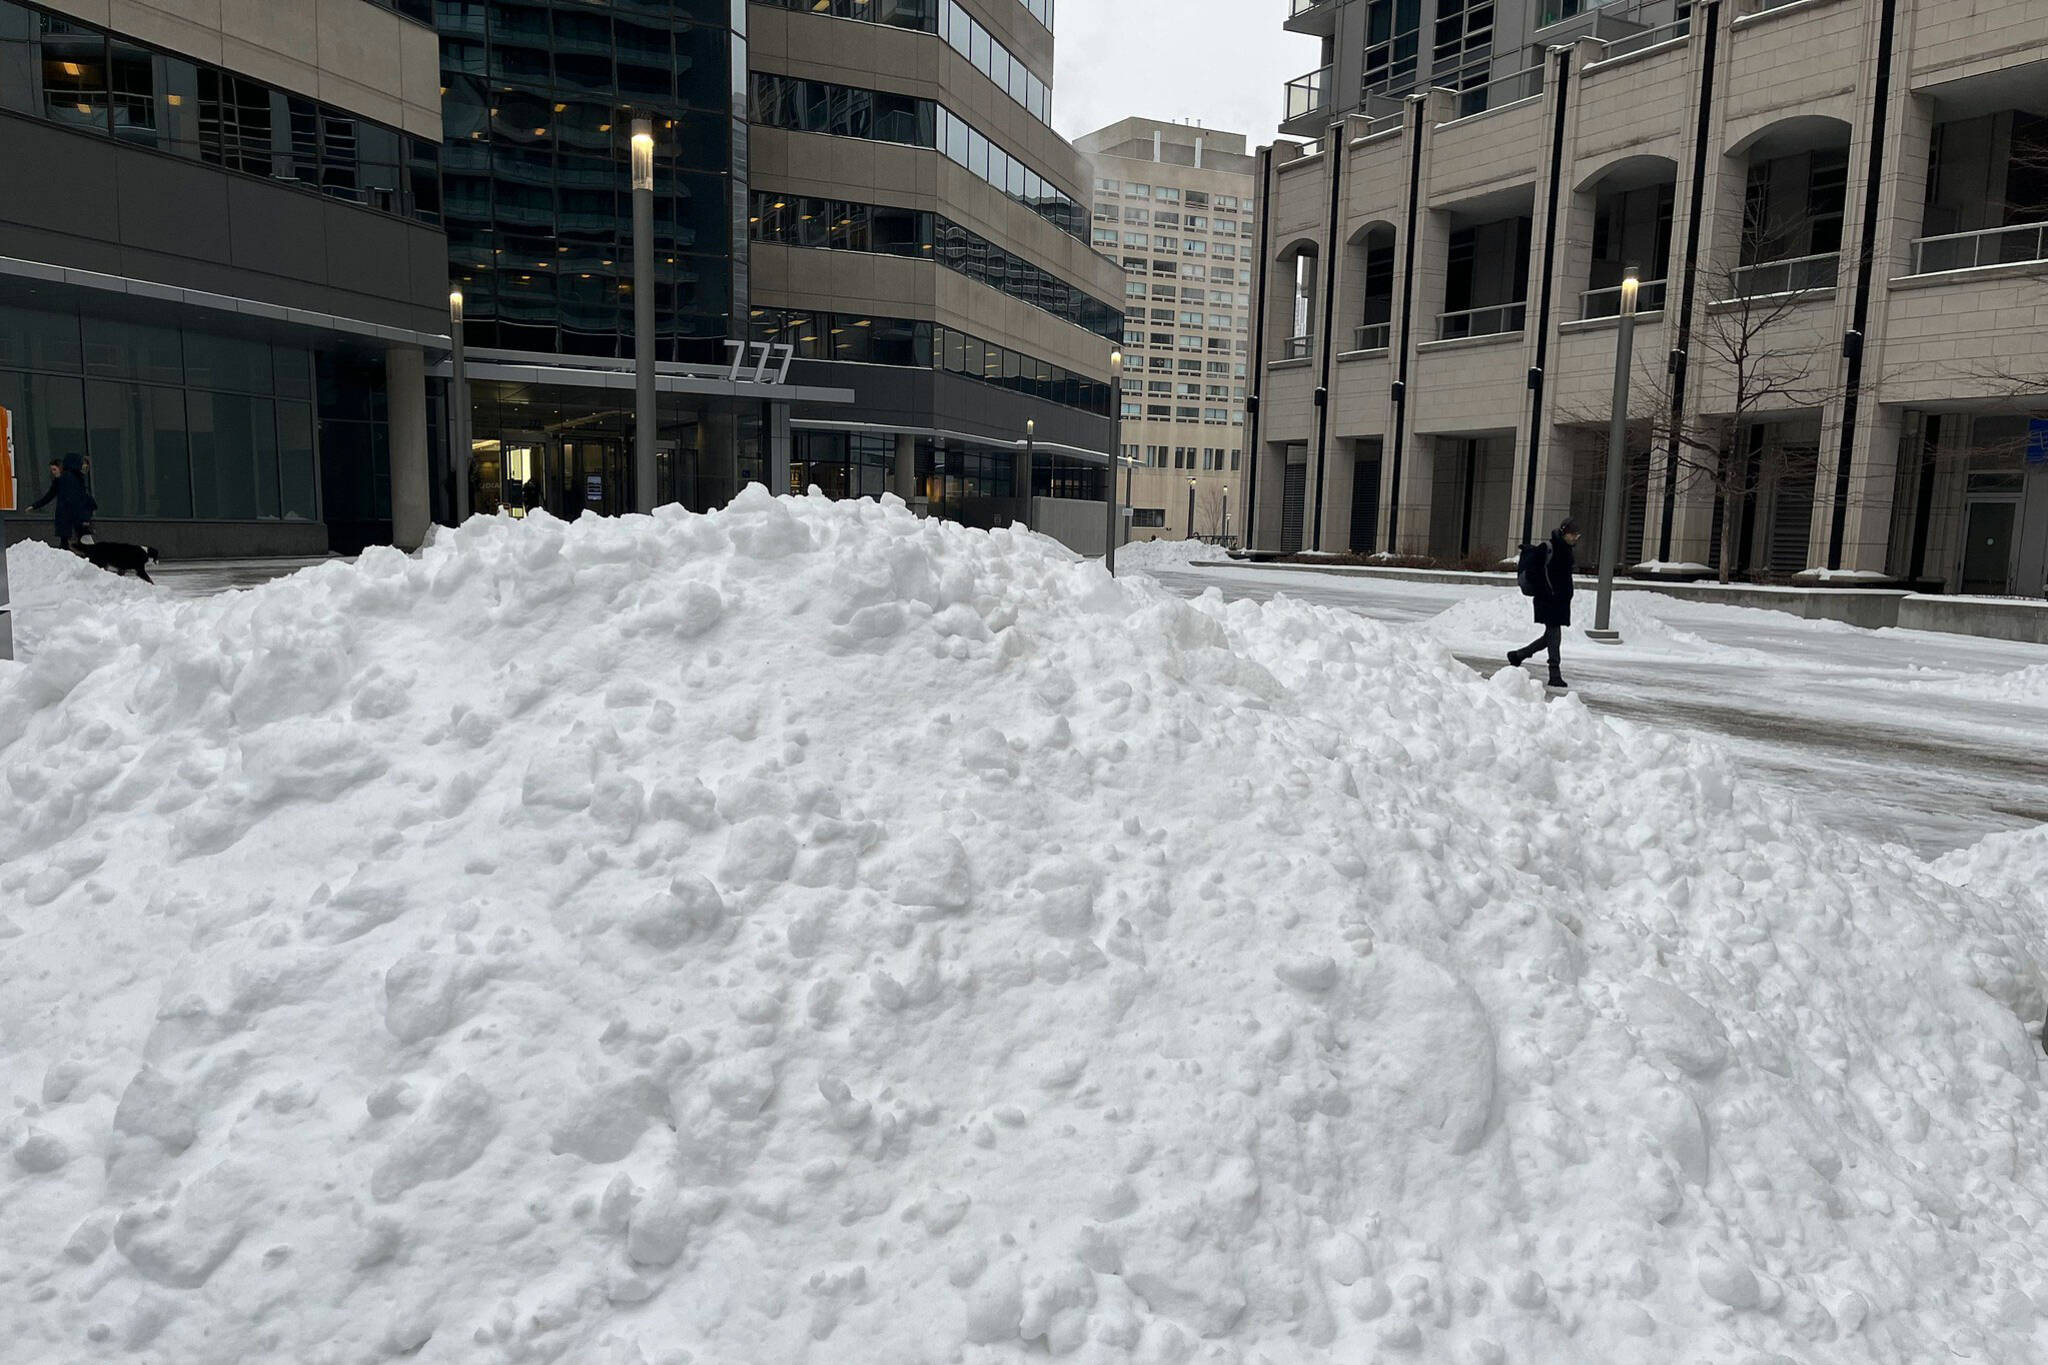 Toronto's huge dump of snow just broke an alltime snowfall record